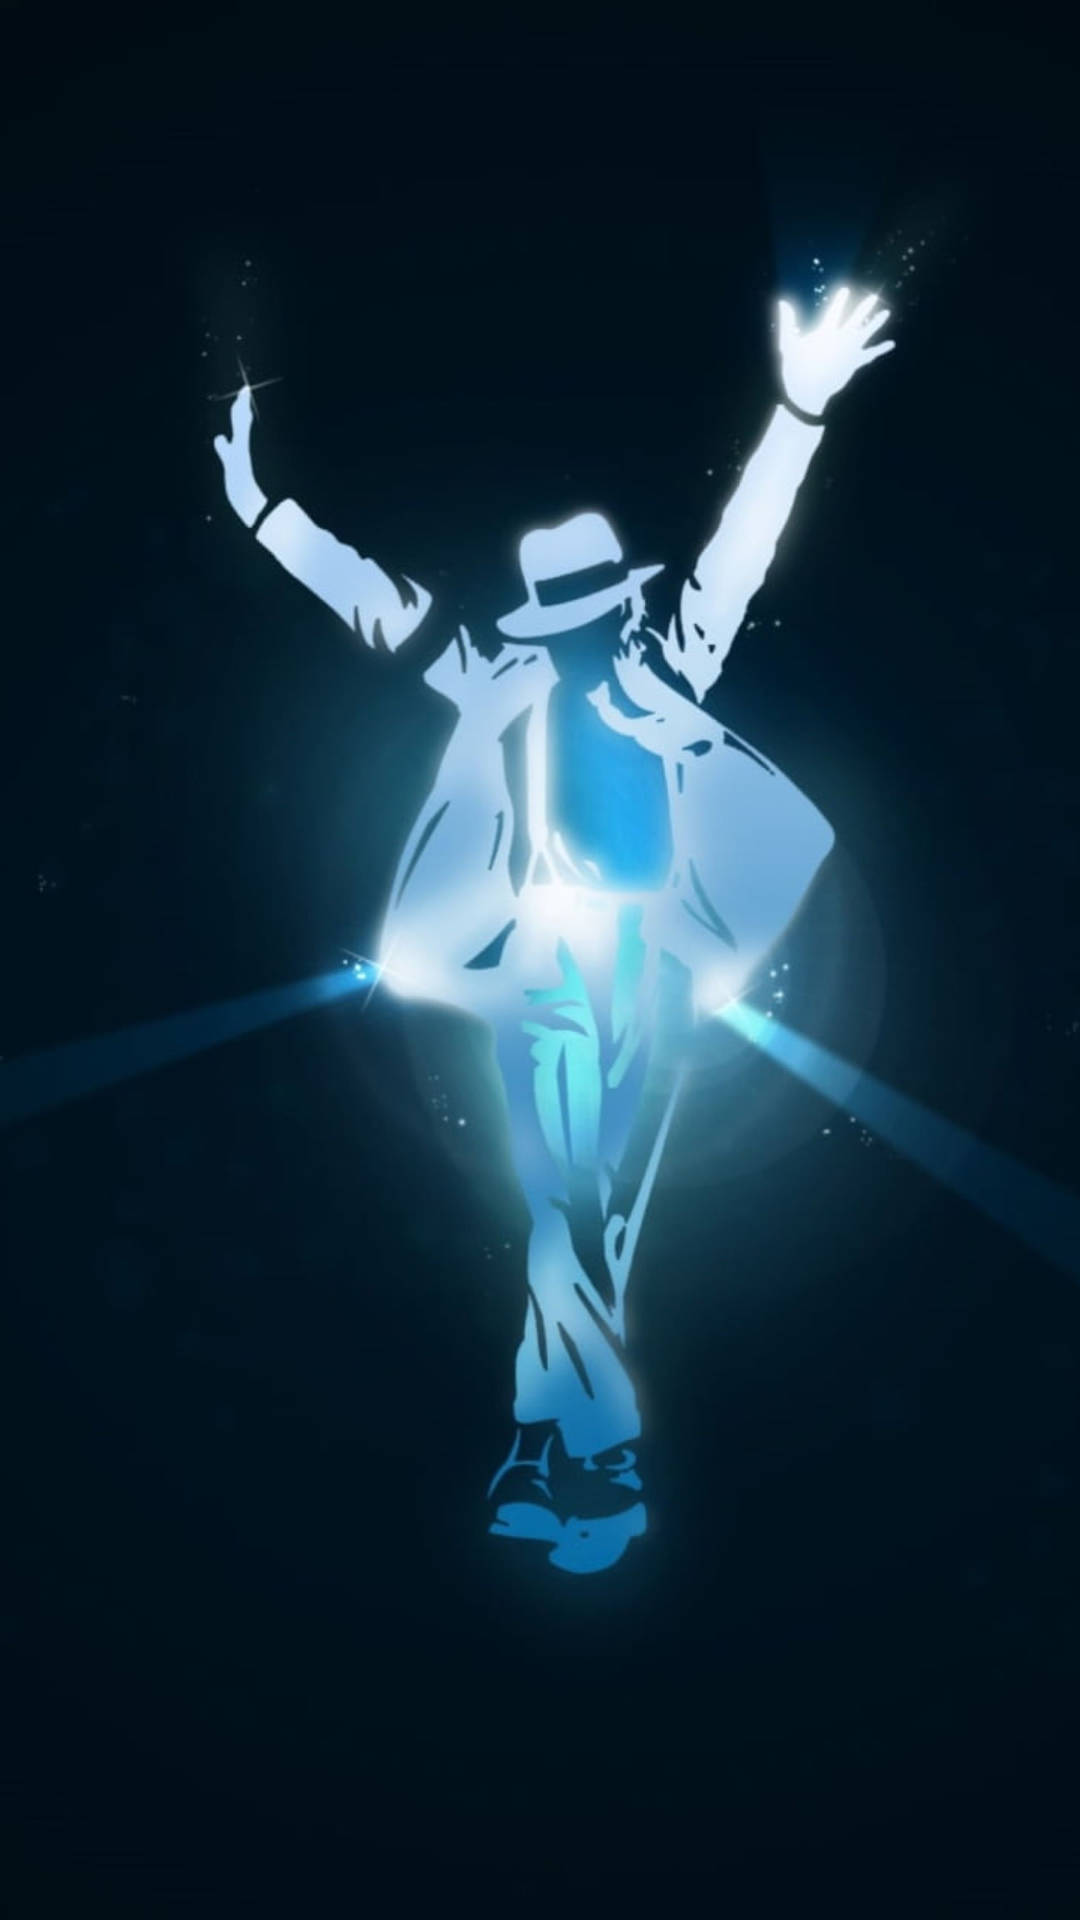 Luminous Michael Jackson Dance